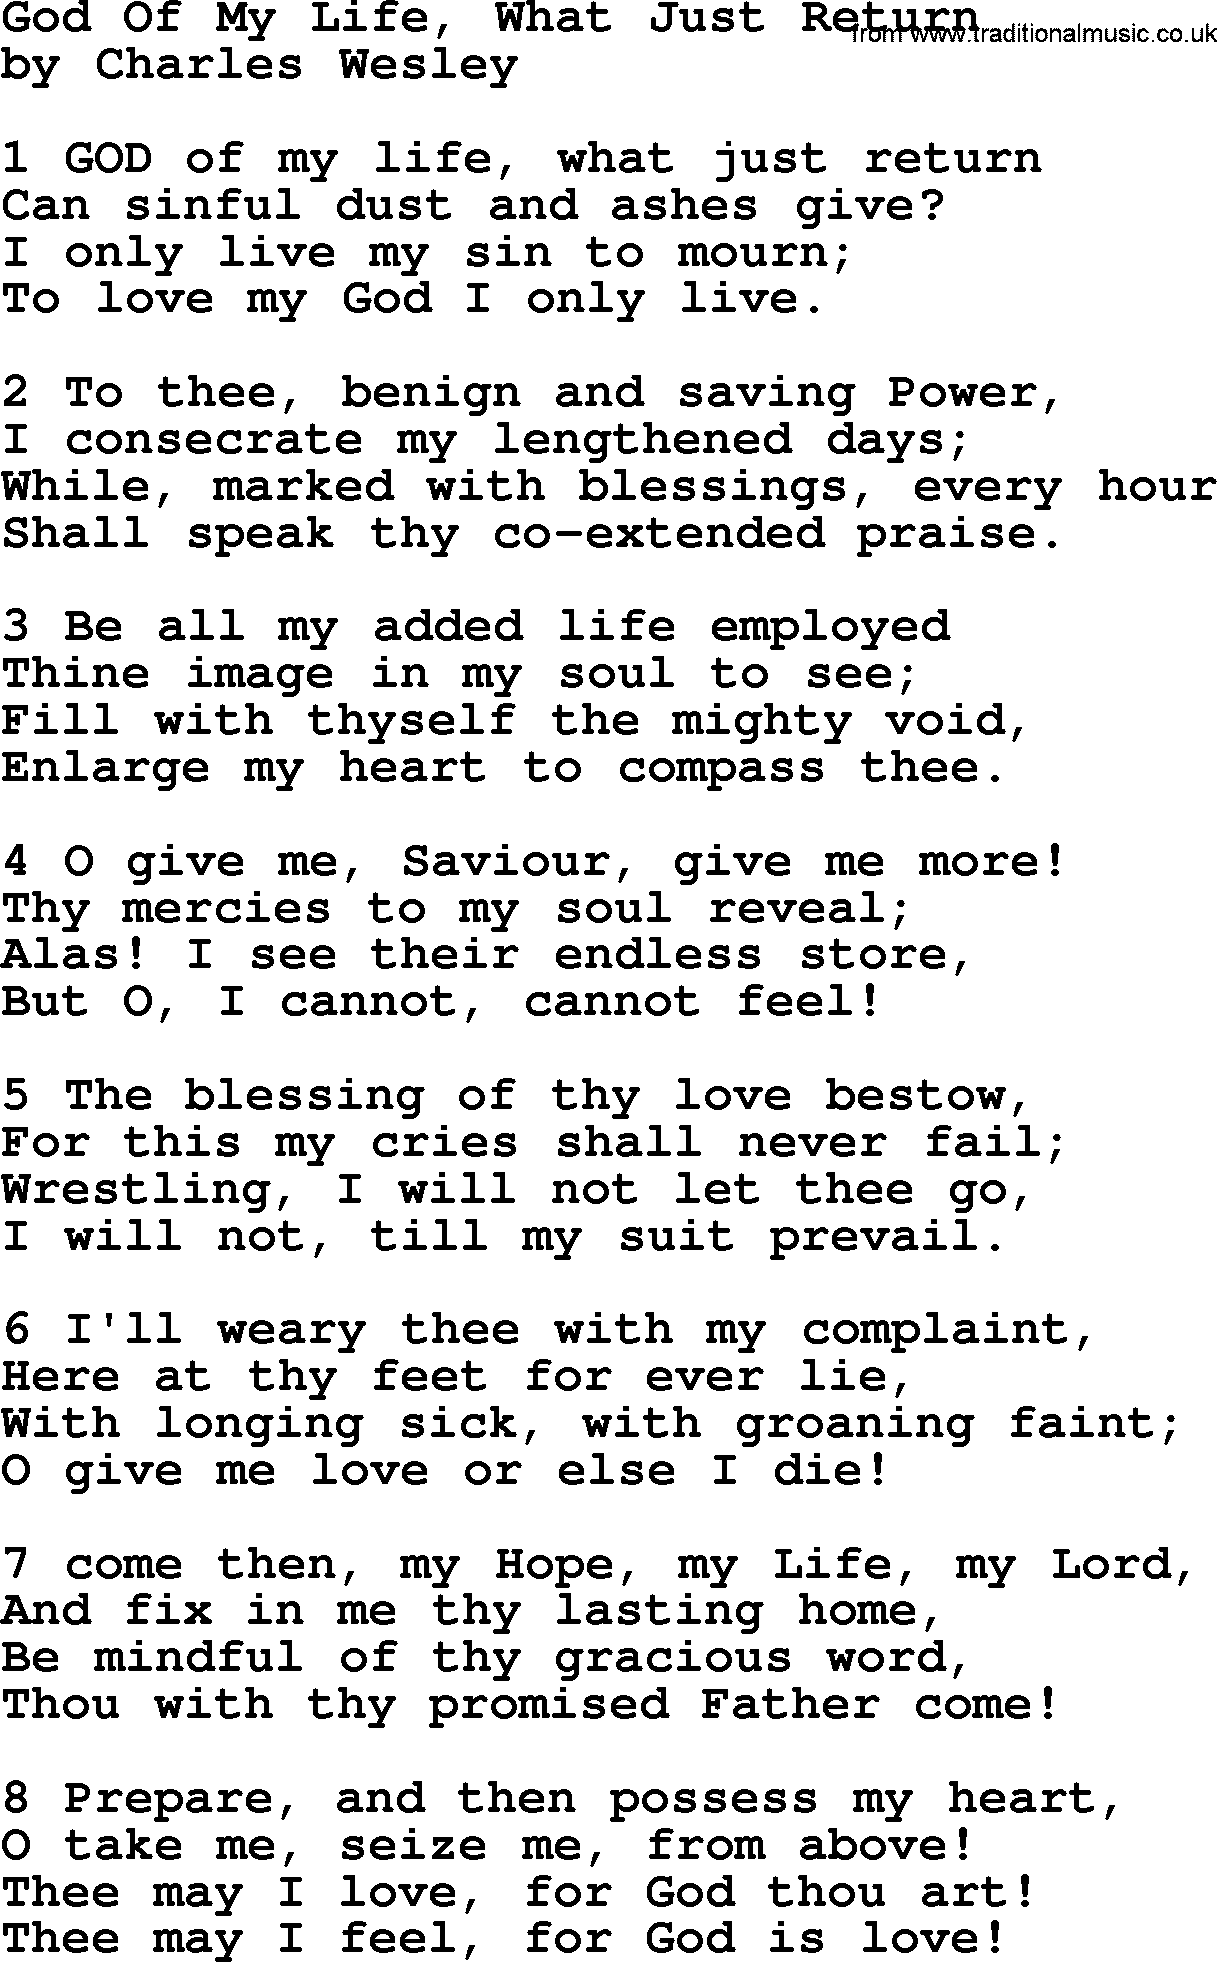 Charles Wesley hymn: God Of My Life, What Just Return, lyrics